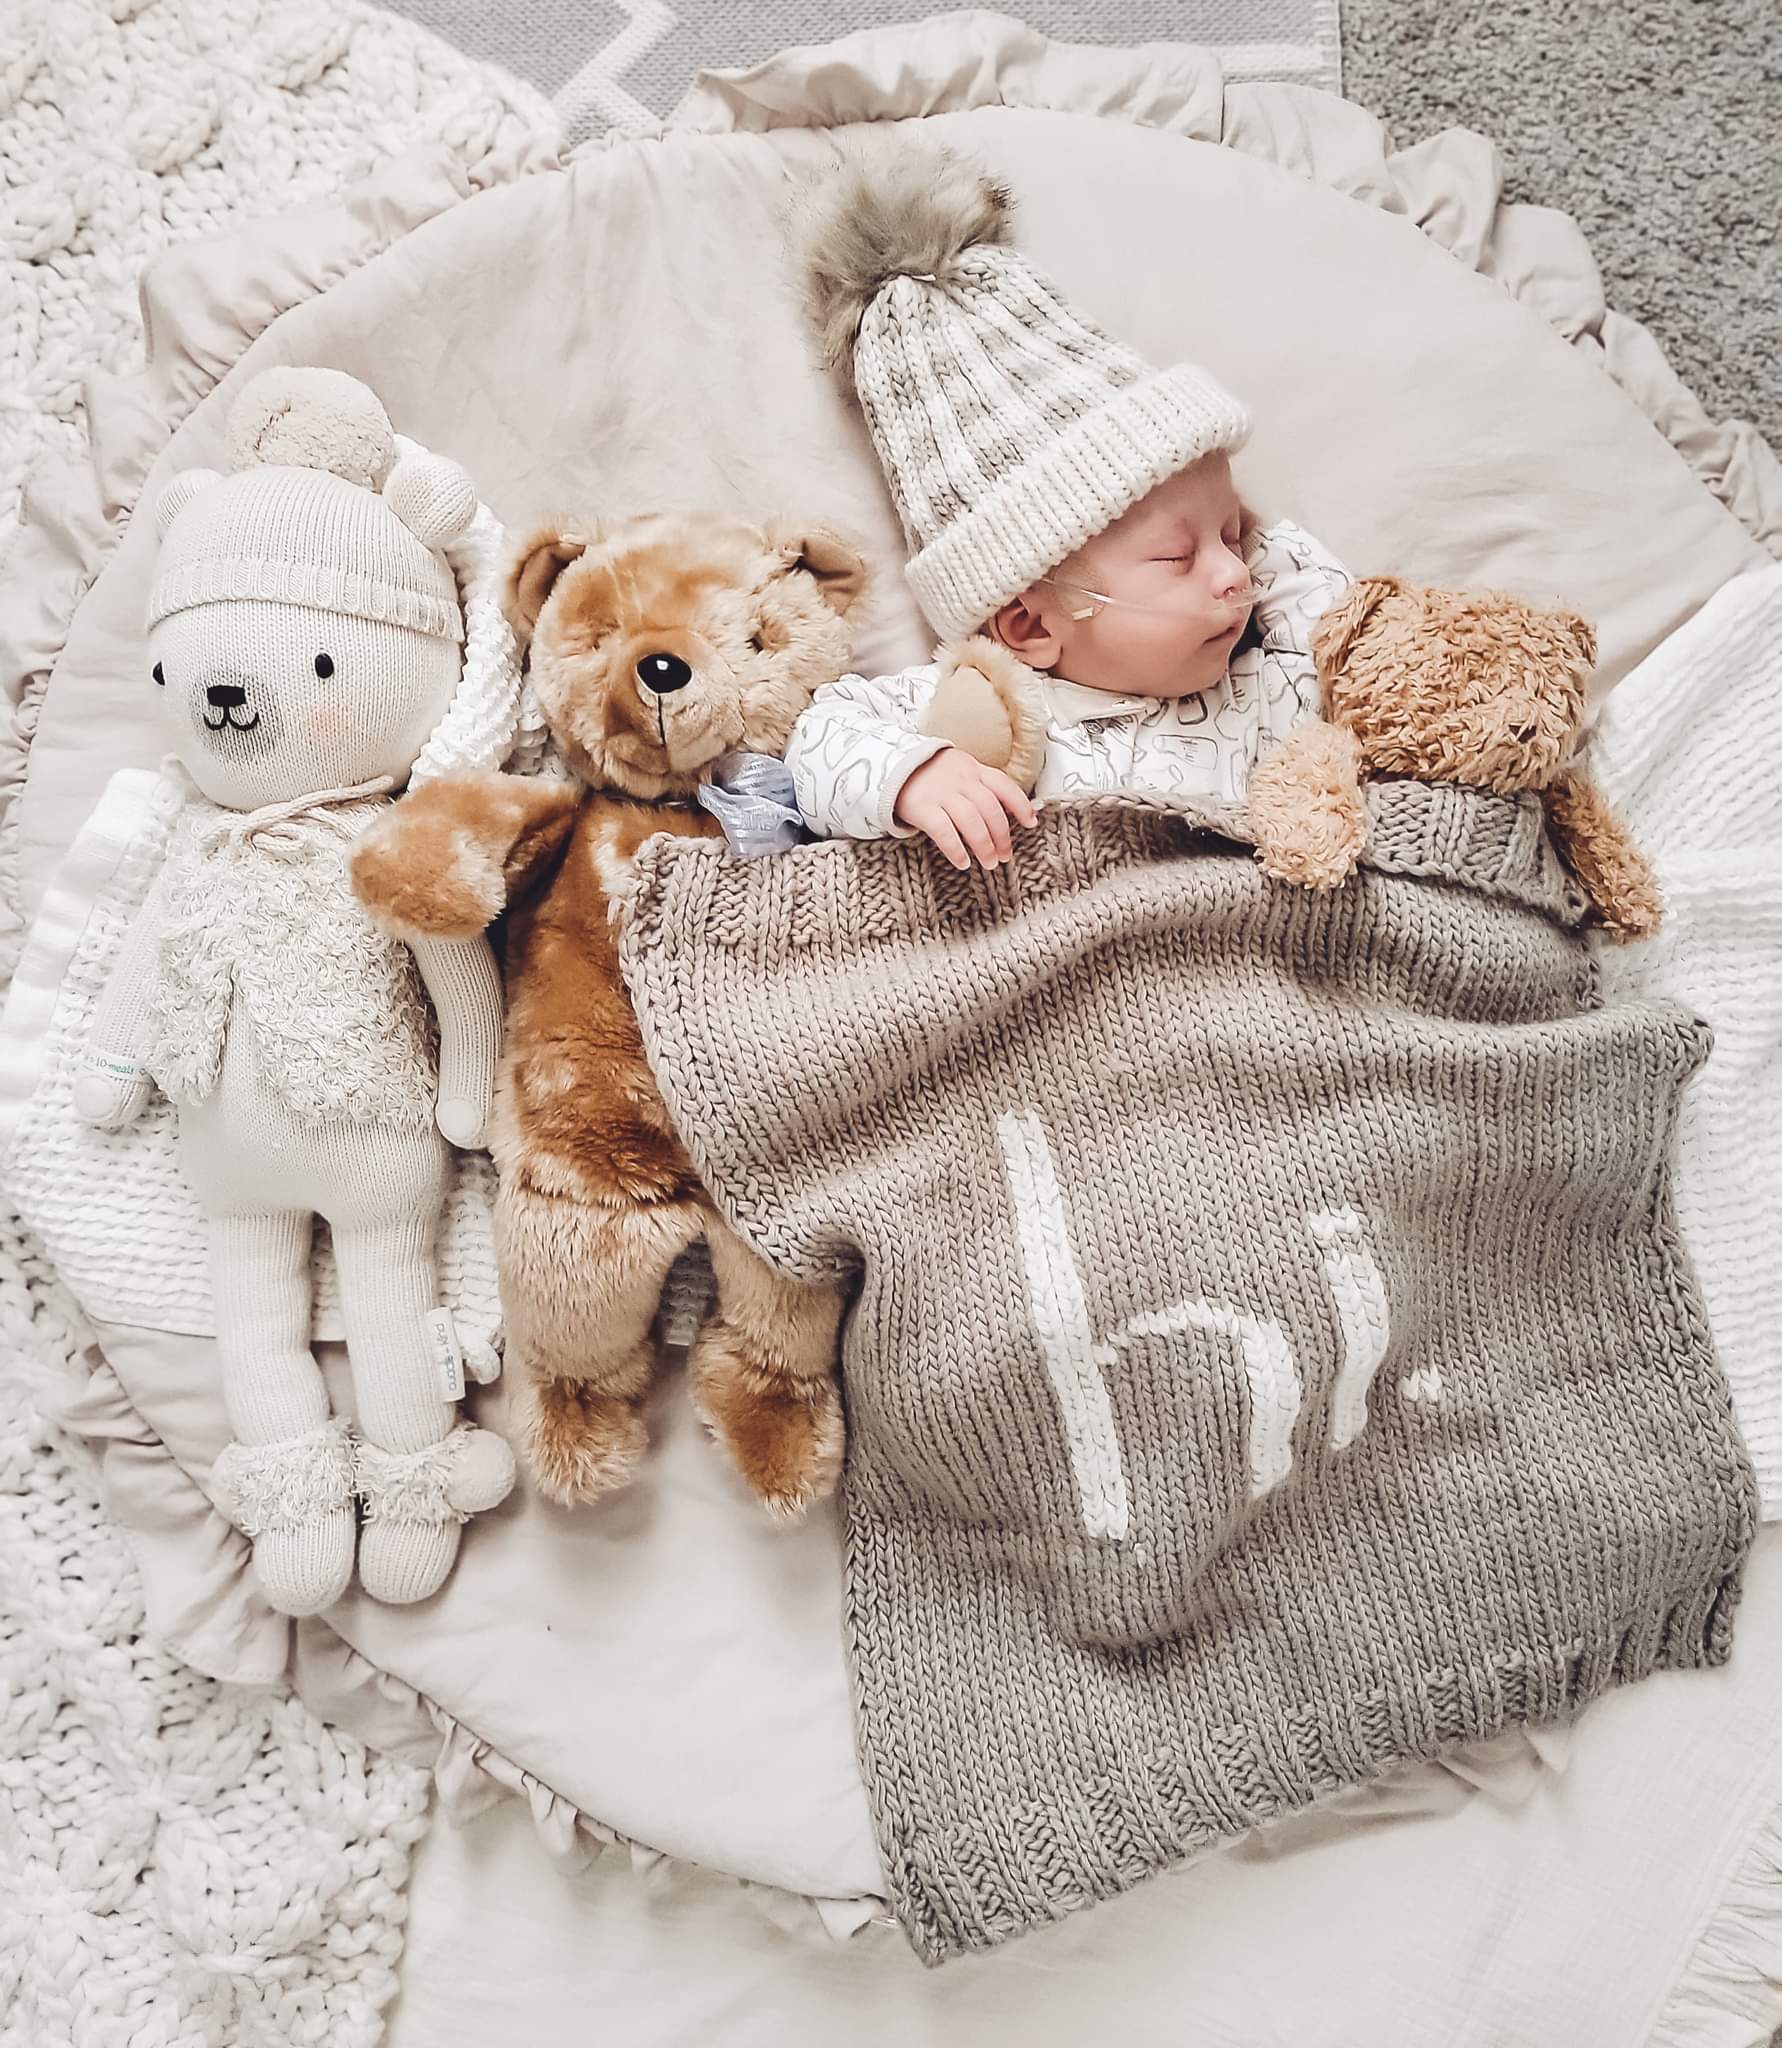 Cocoon of Comfort: The Endless Benefits of Baby Blankets - Huggalugs